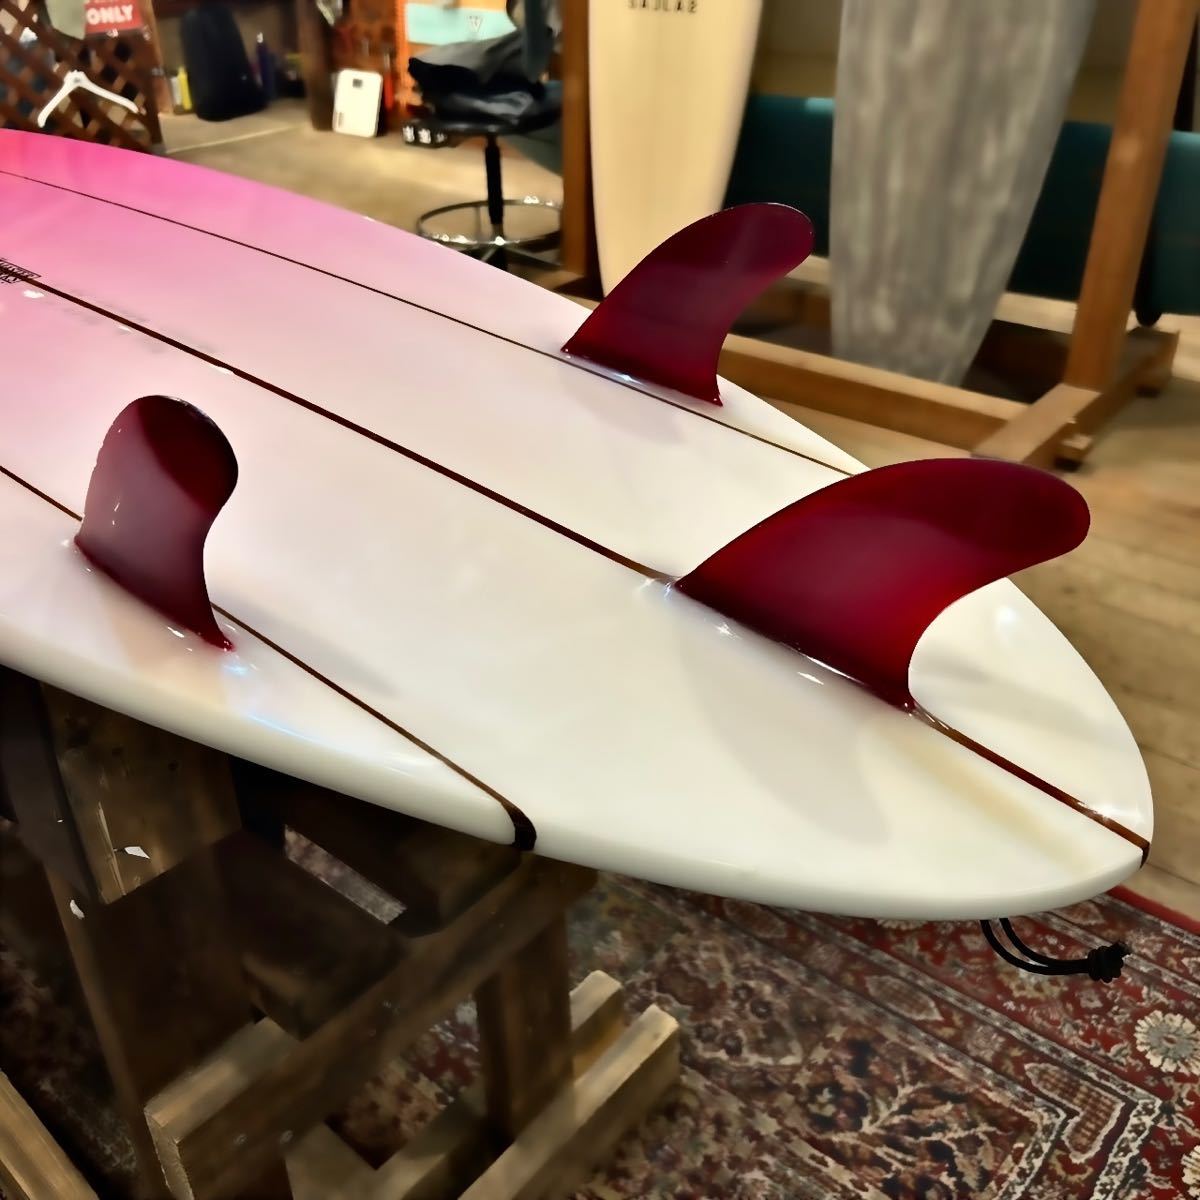  прекрасный товар б/у Tokoro surfboardstokoro mid length доска для серфинга Гаваи 